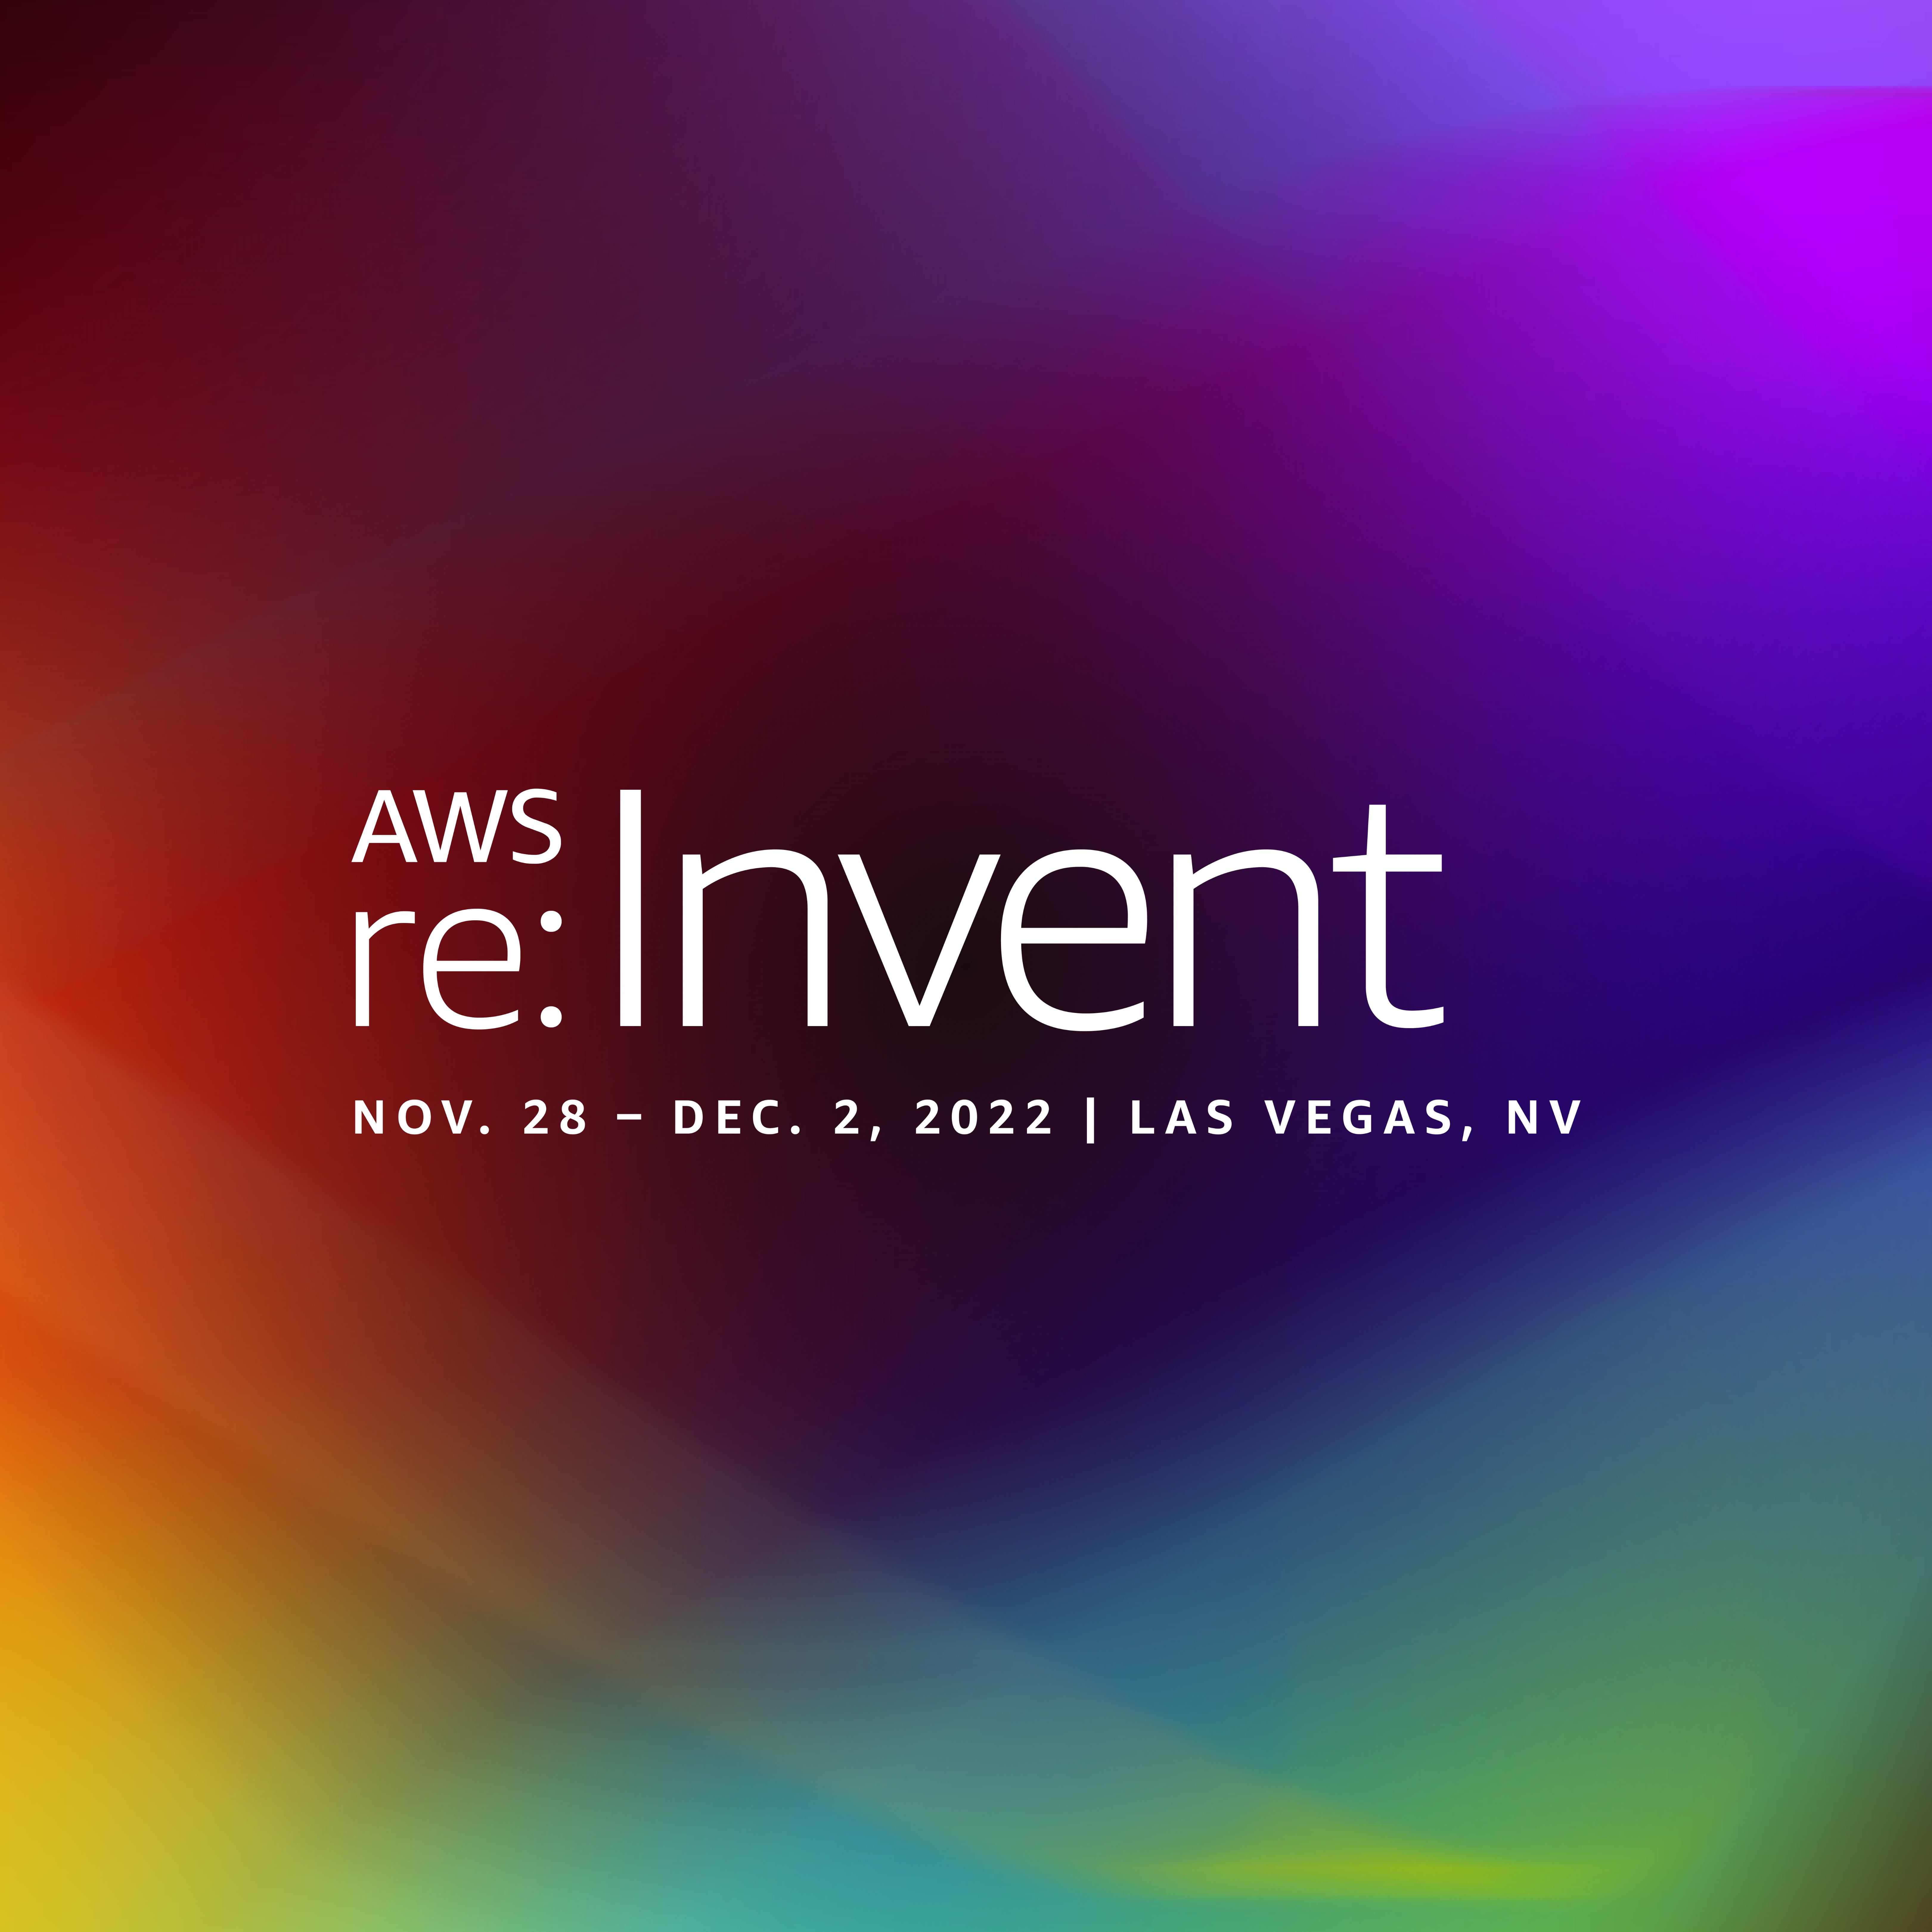 AWS re:Invent | Amazon Web Services